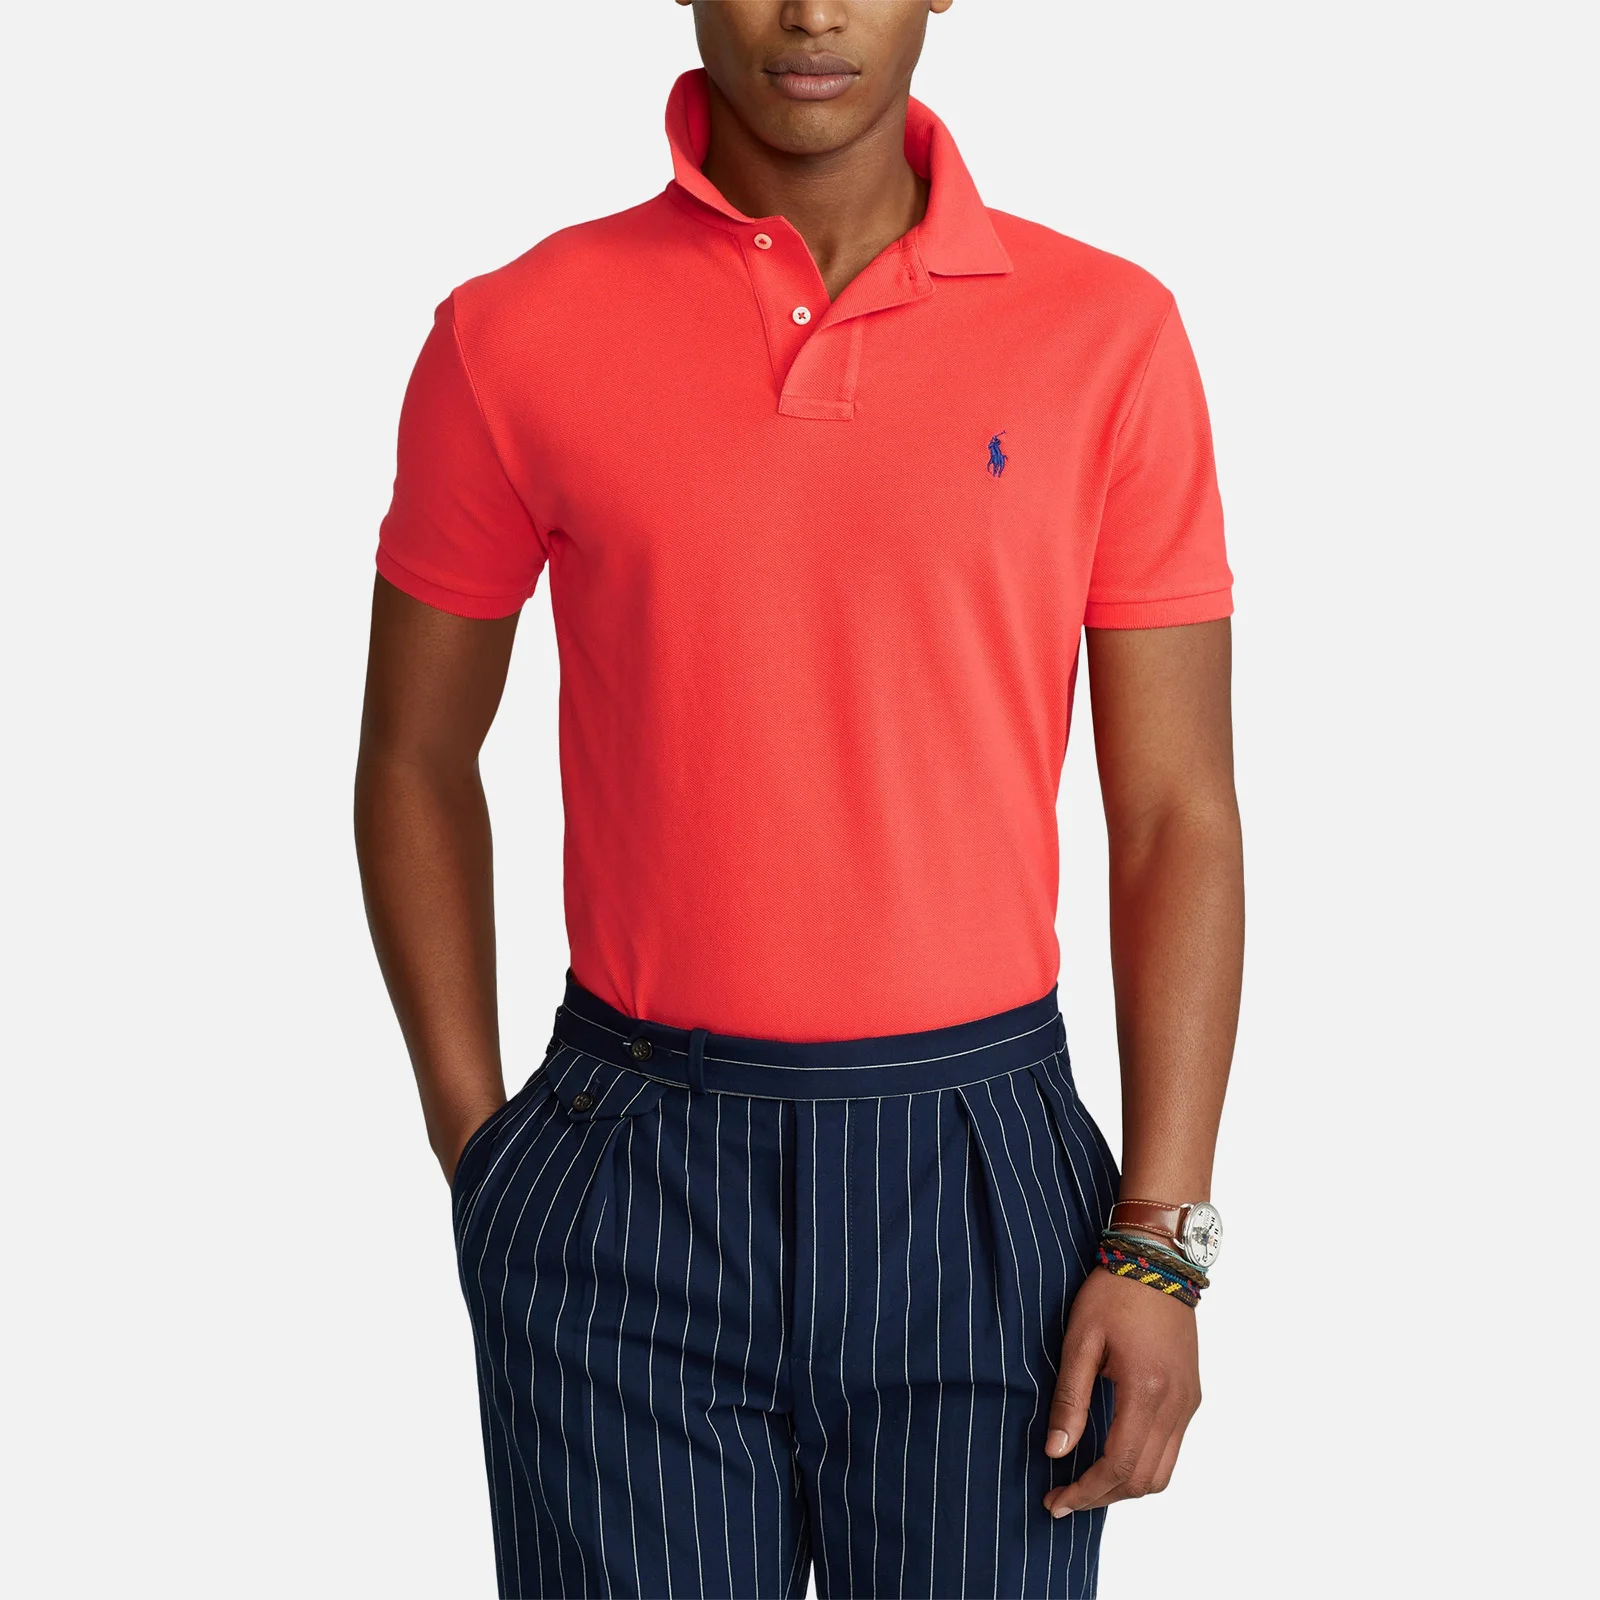 Polo Ralph Lauren Men's Mesh Knit Slim Fit Polo Shirt - Racing Red Image 1